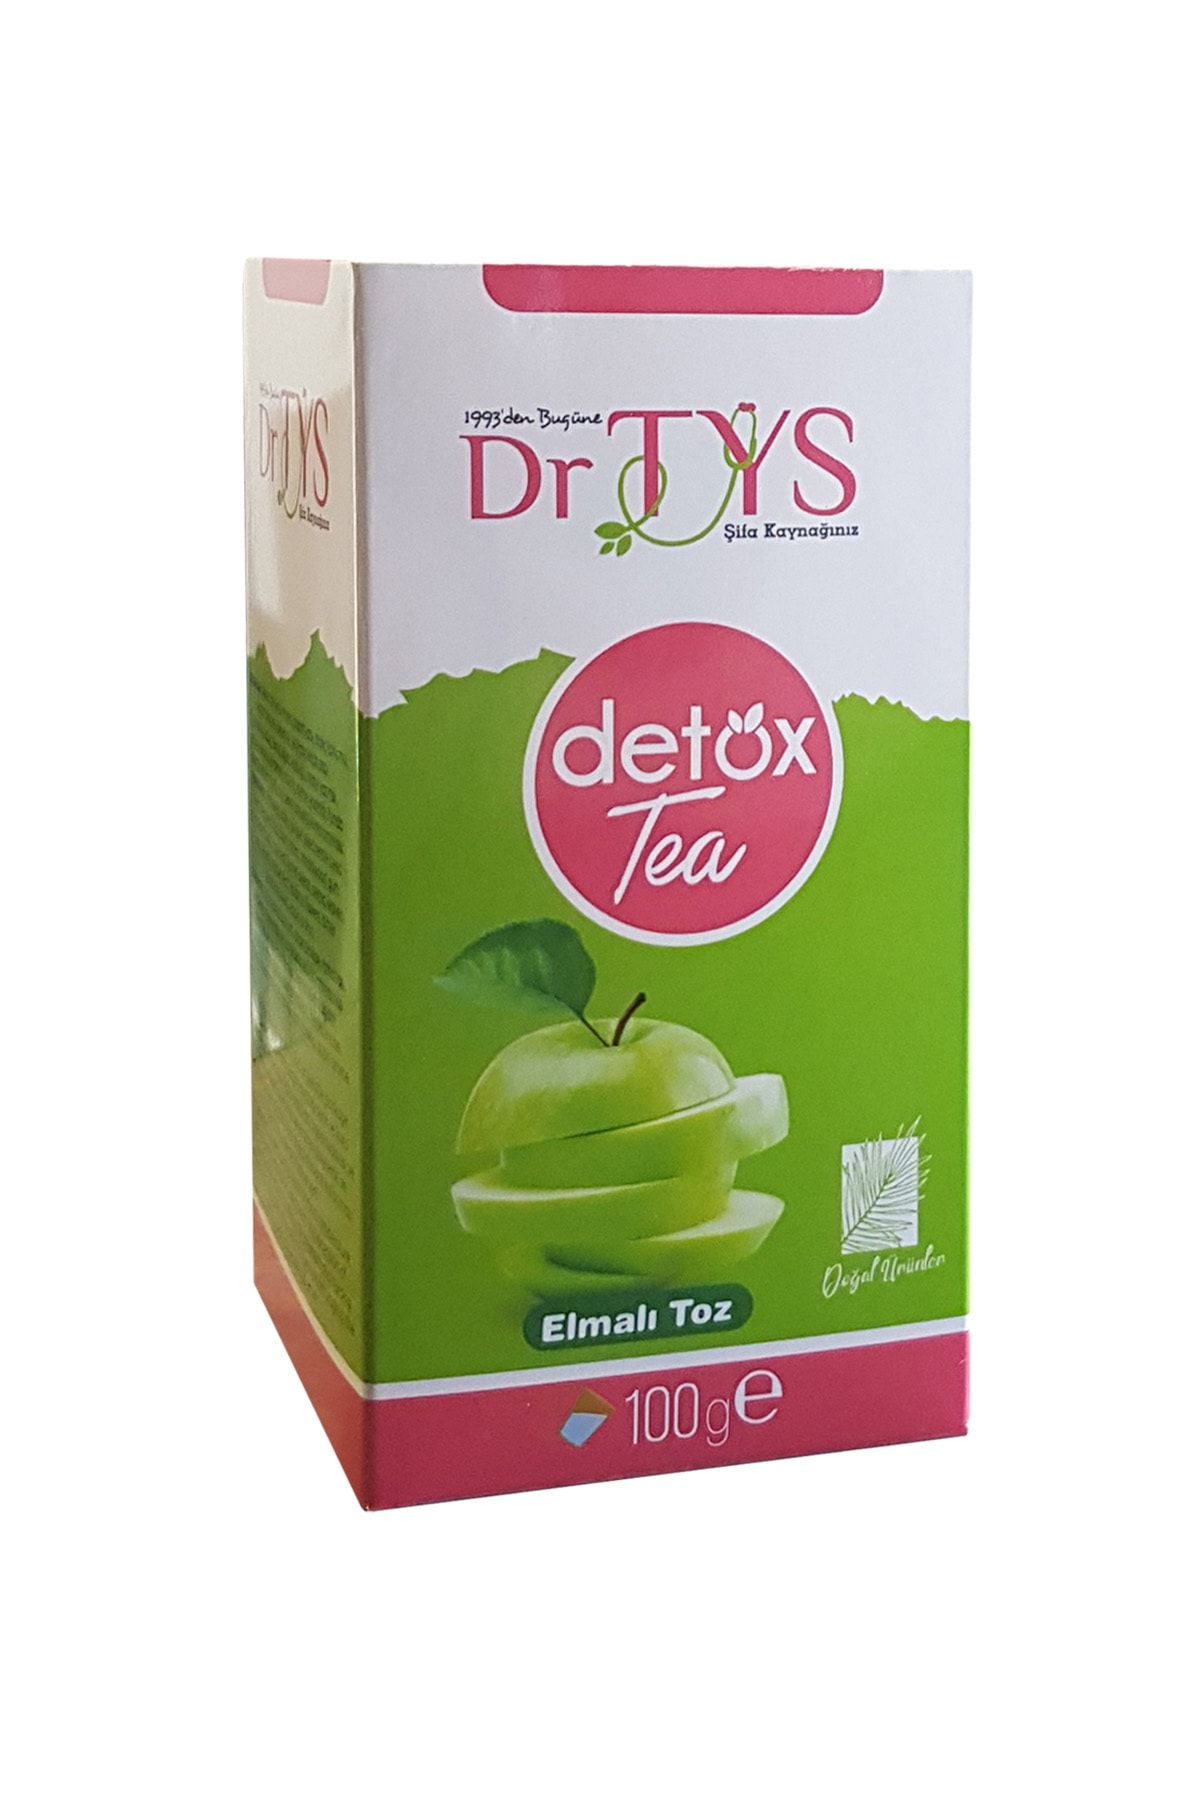 Zencefil Organik Dr Tys Detox Tea Elmalı Toz Çay 100 gr Elma Tozu Detoks Çayı